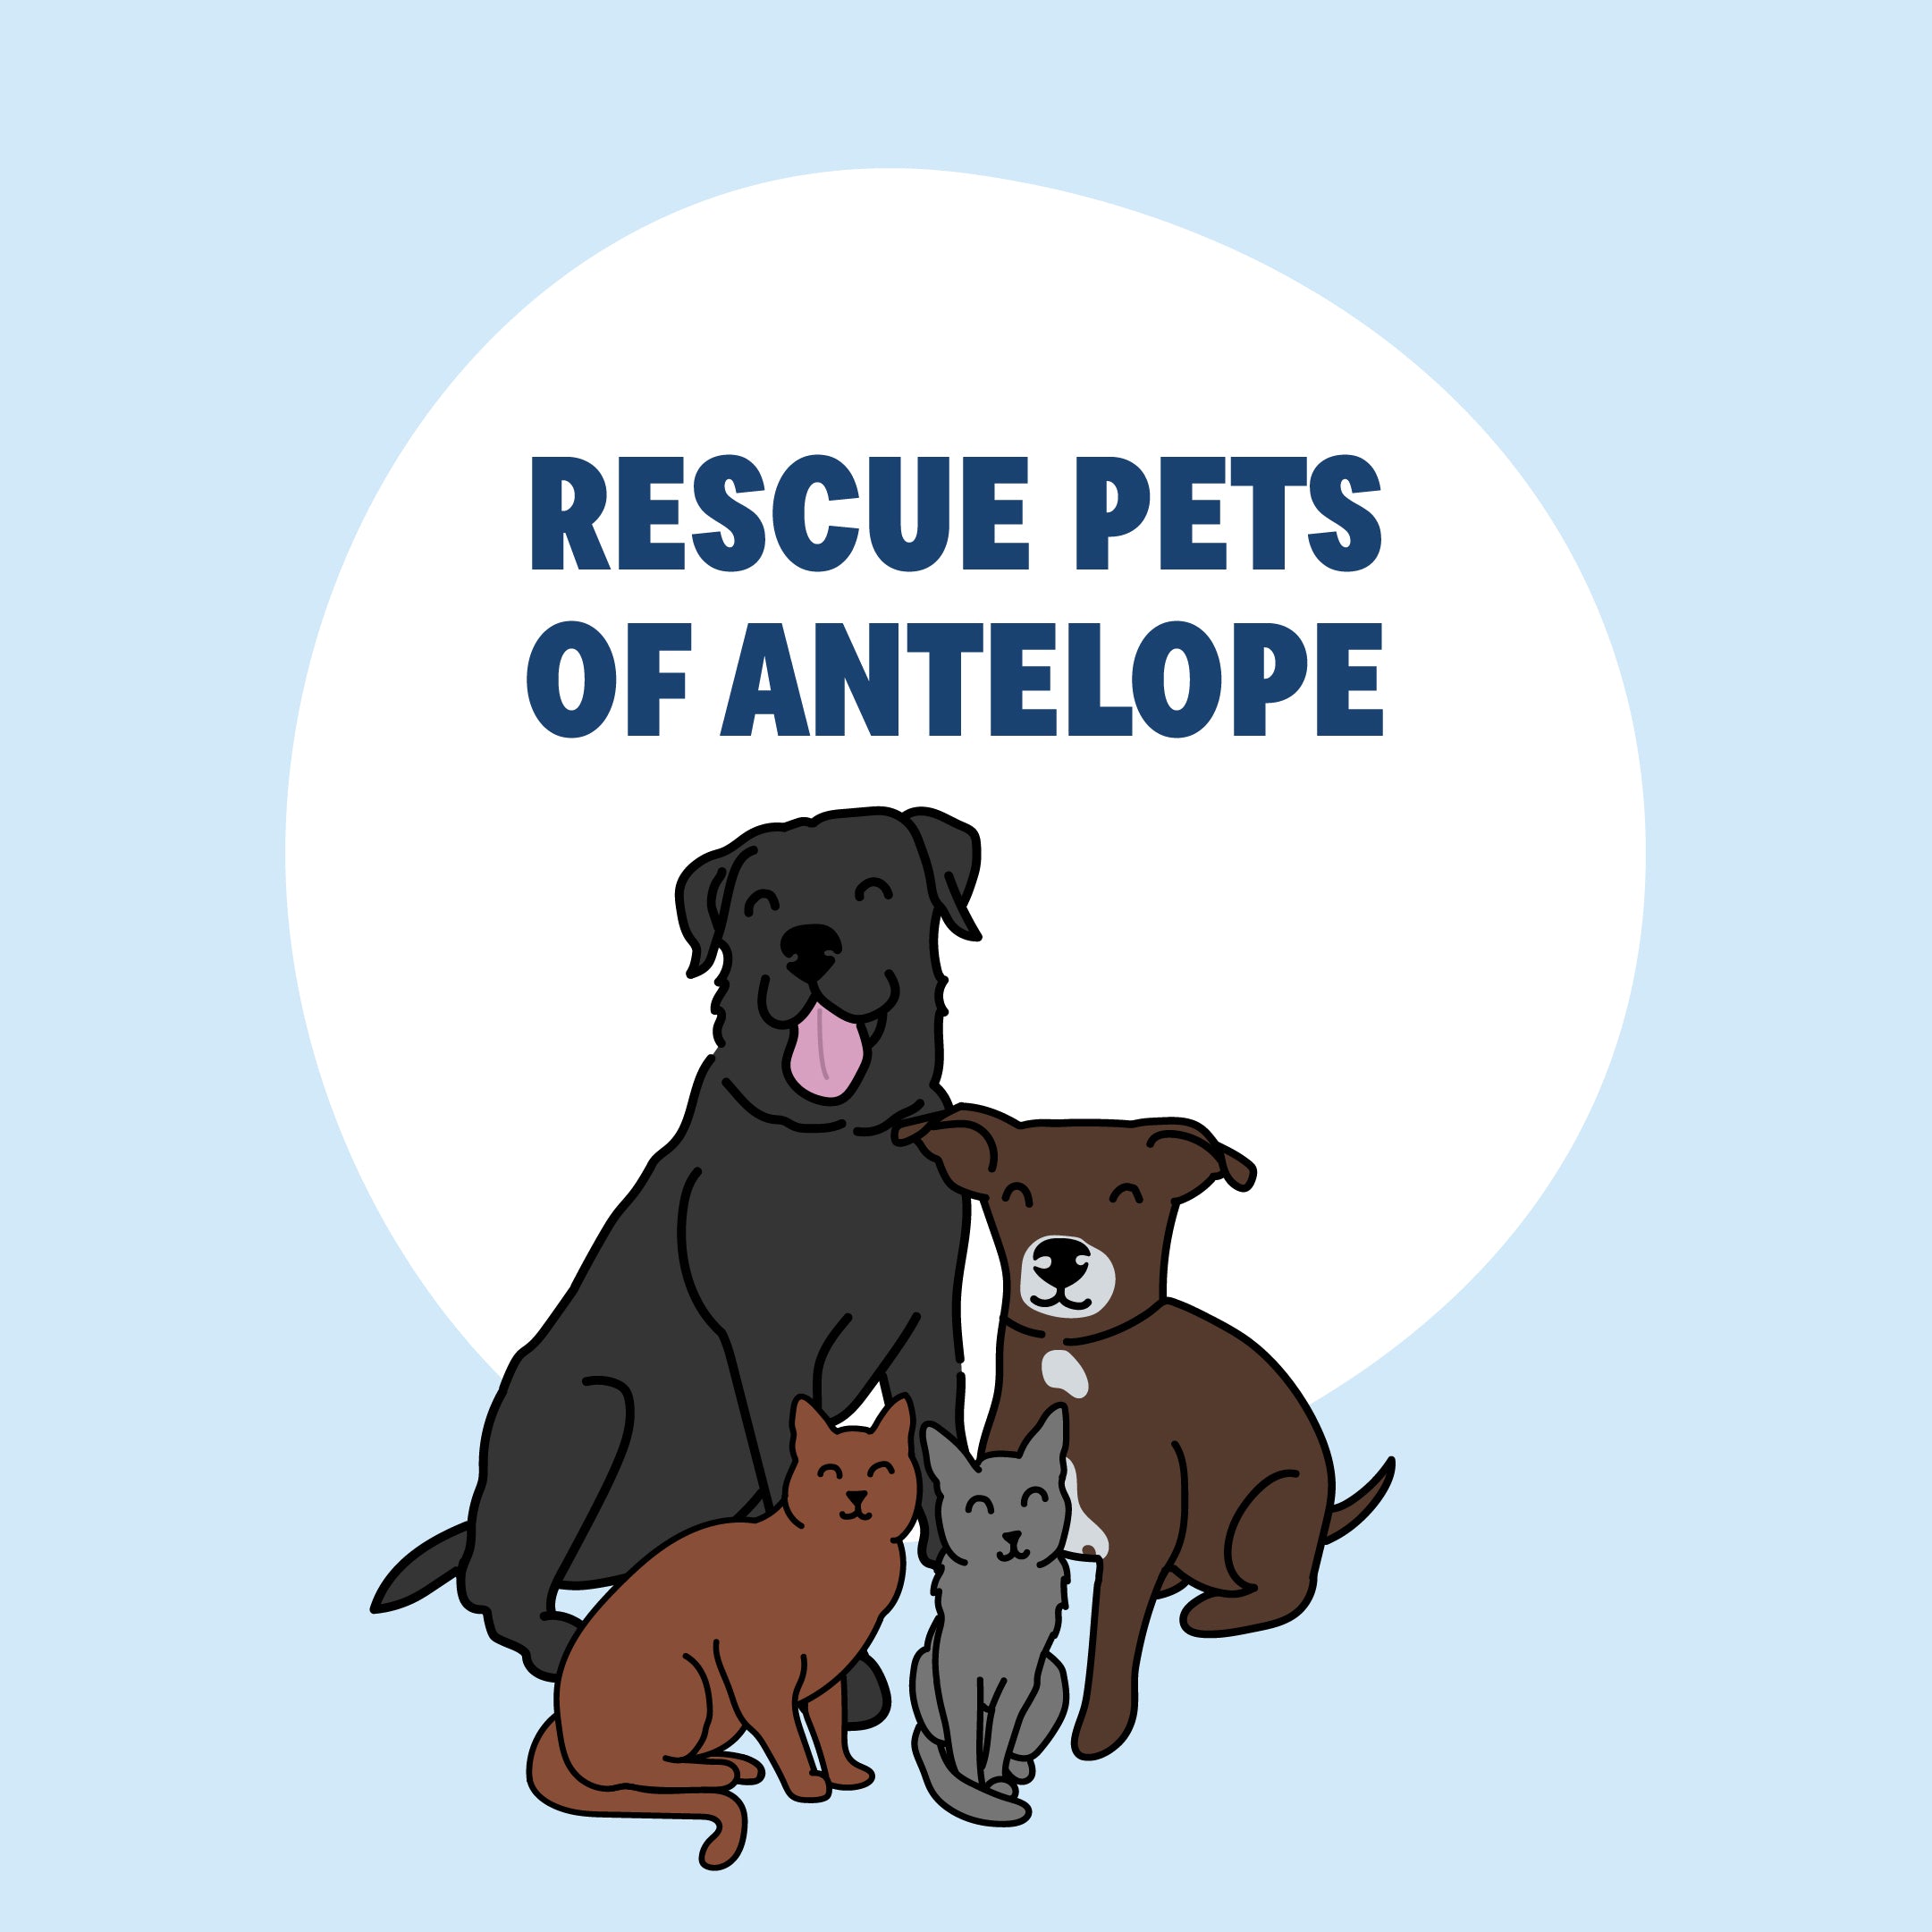 Meet Antelope's Rescue Pets